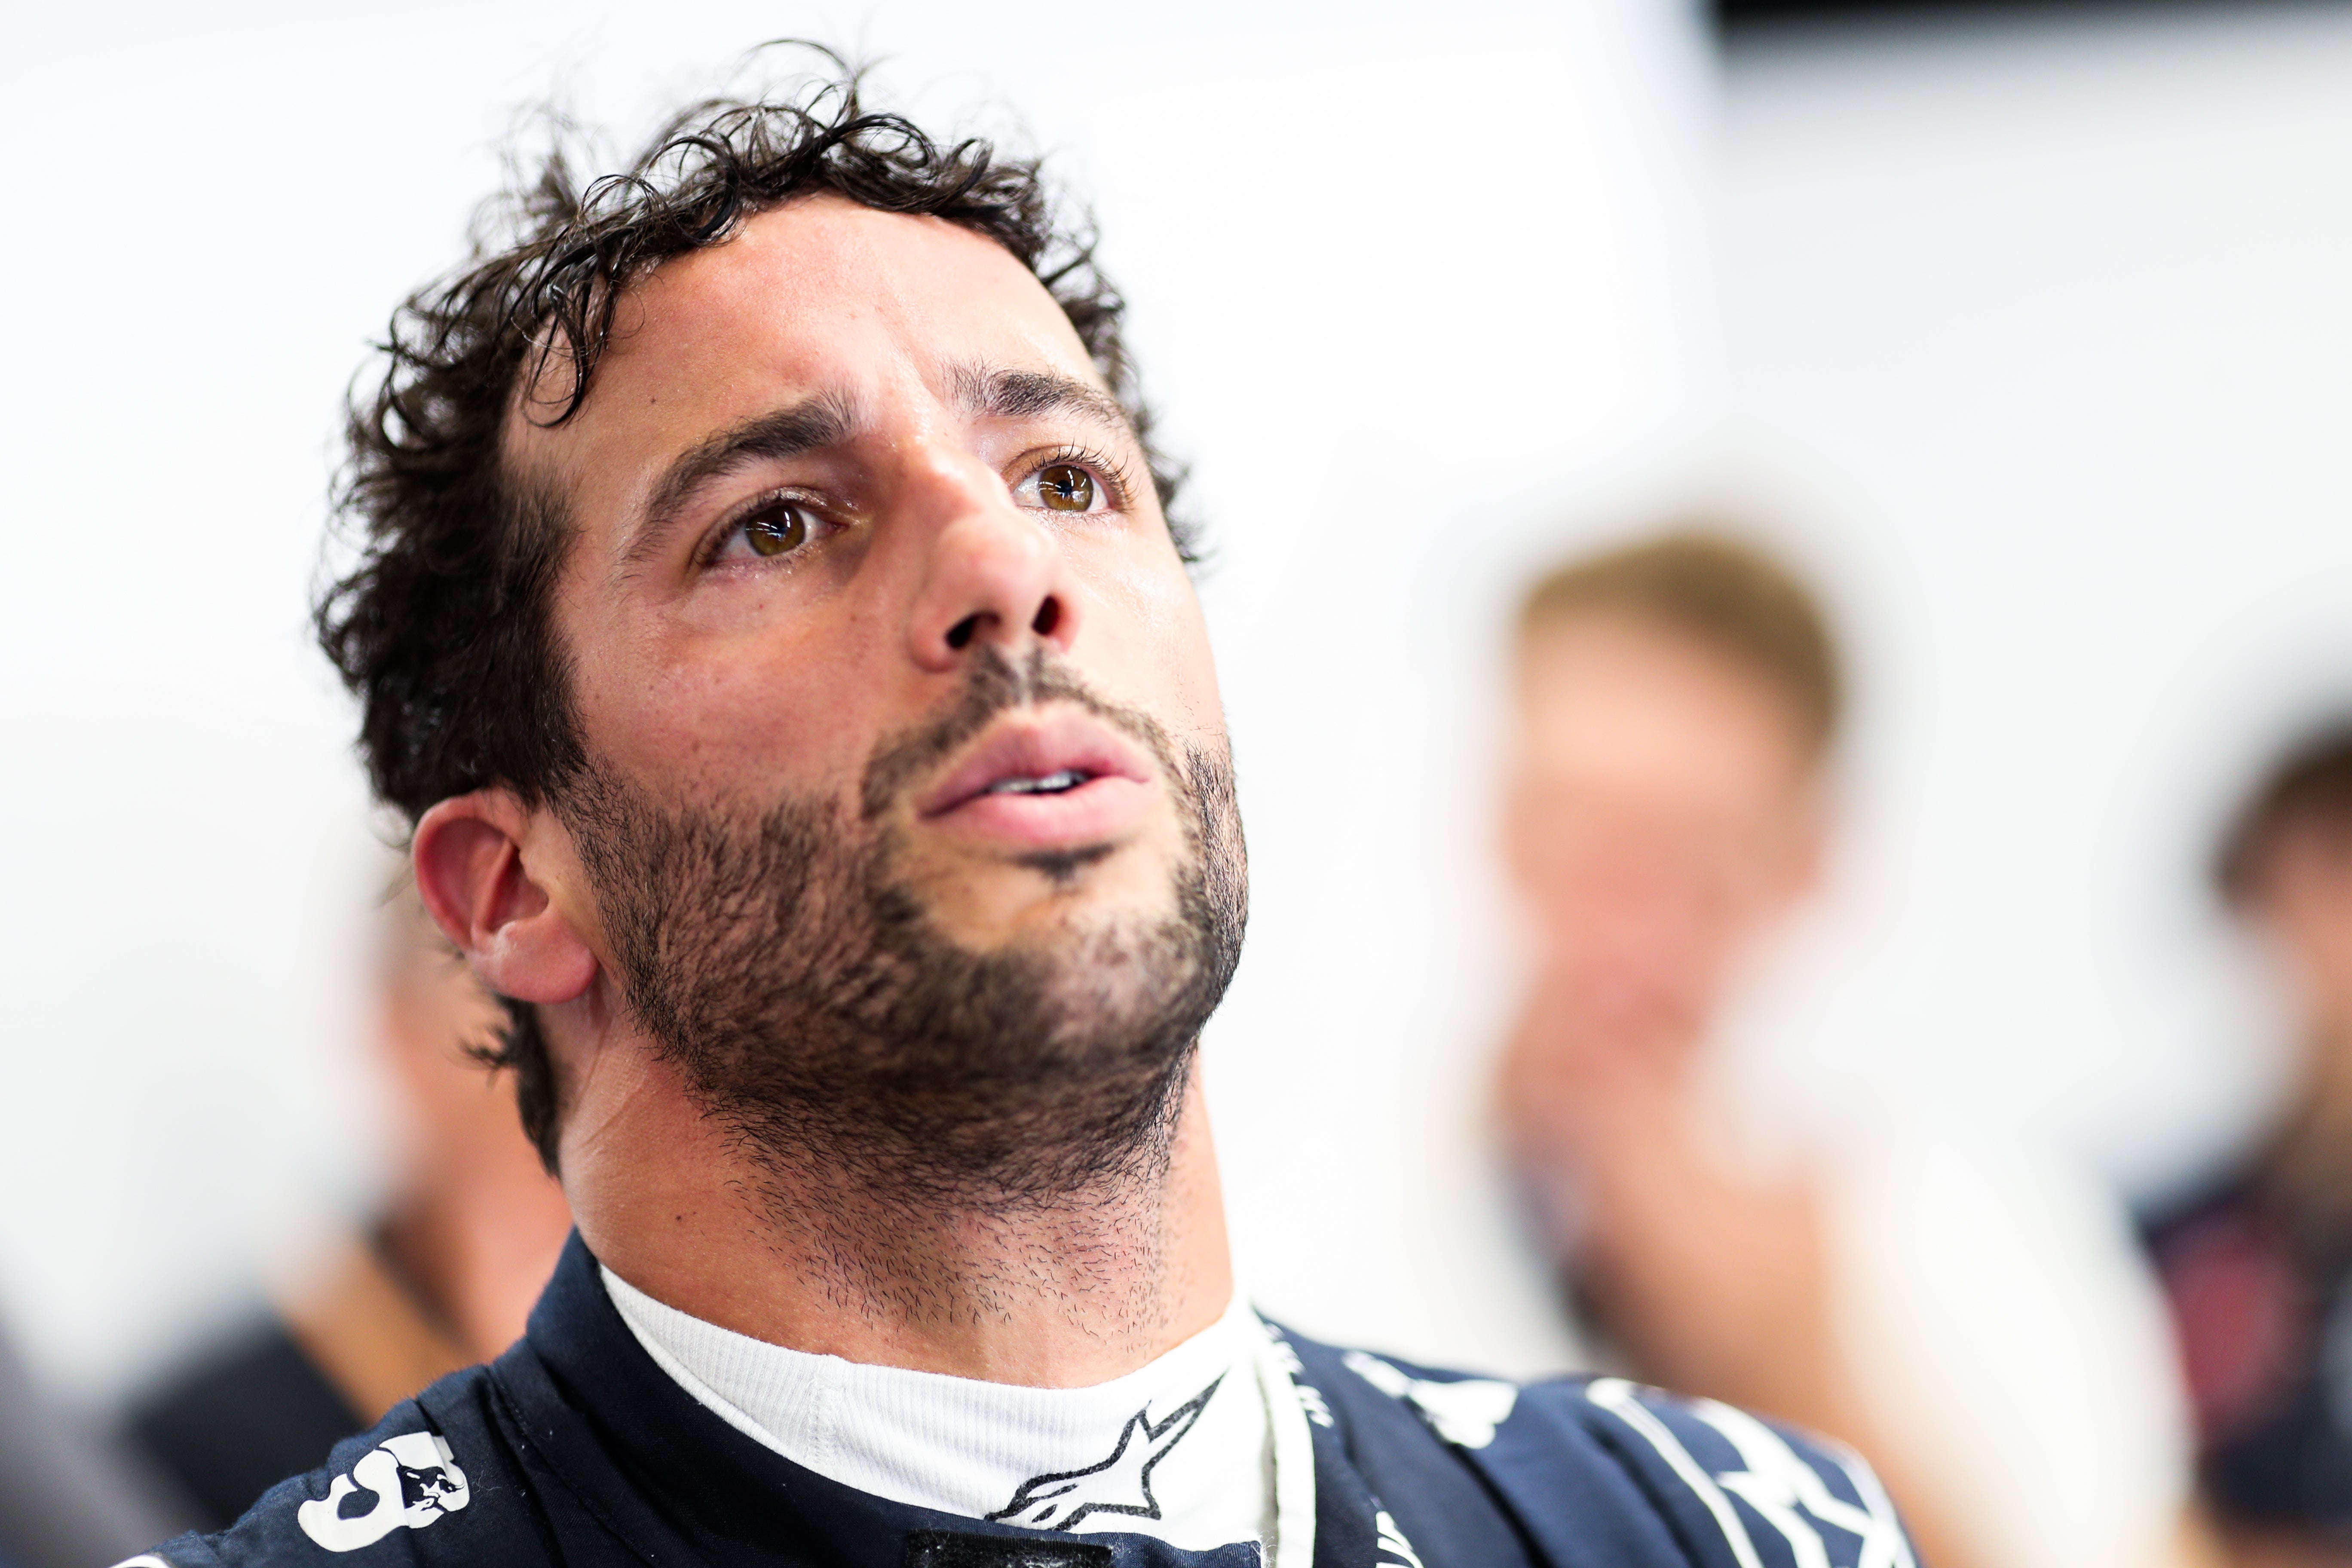 Daniel Ricciardo will miss his fifth F1 race in a row